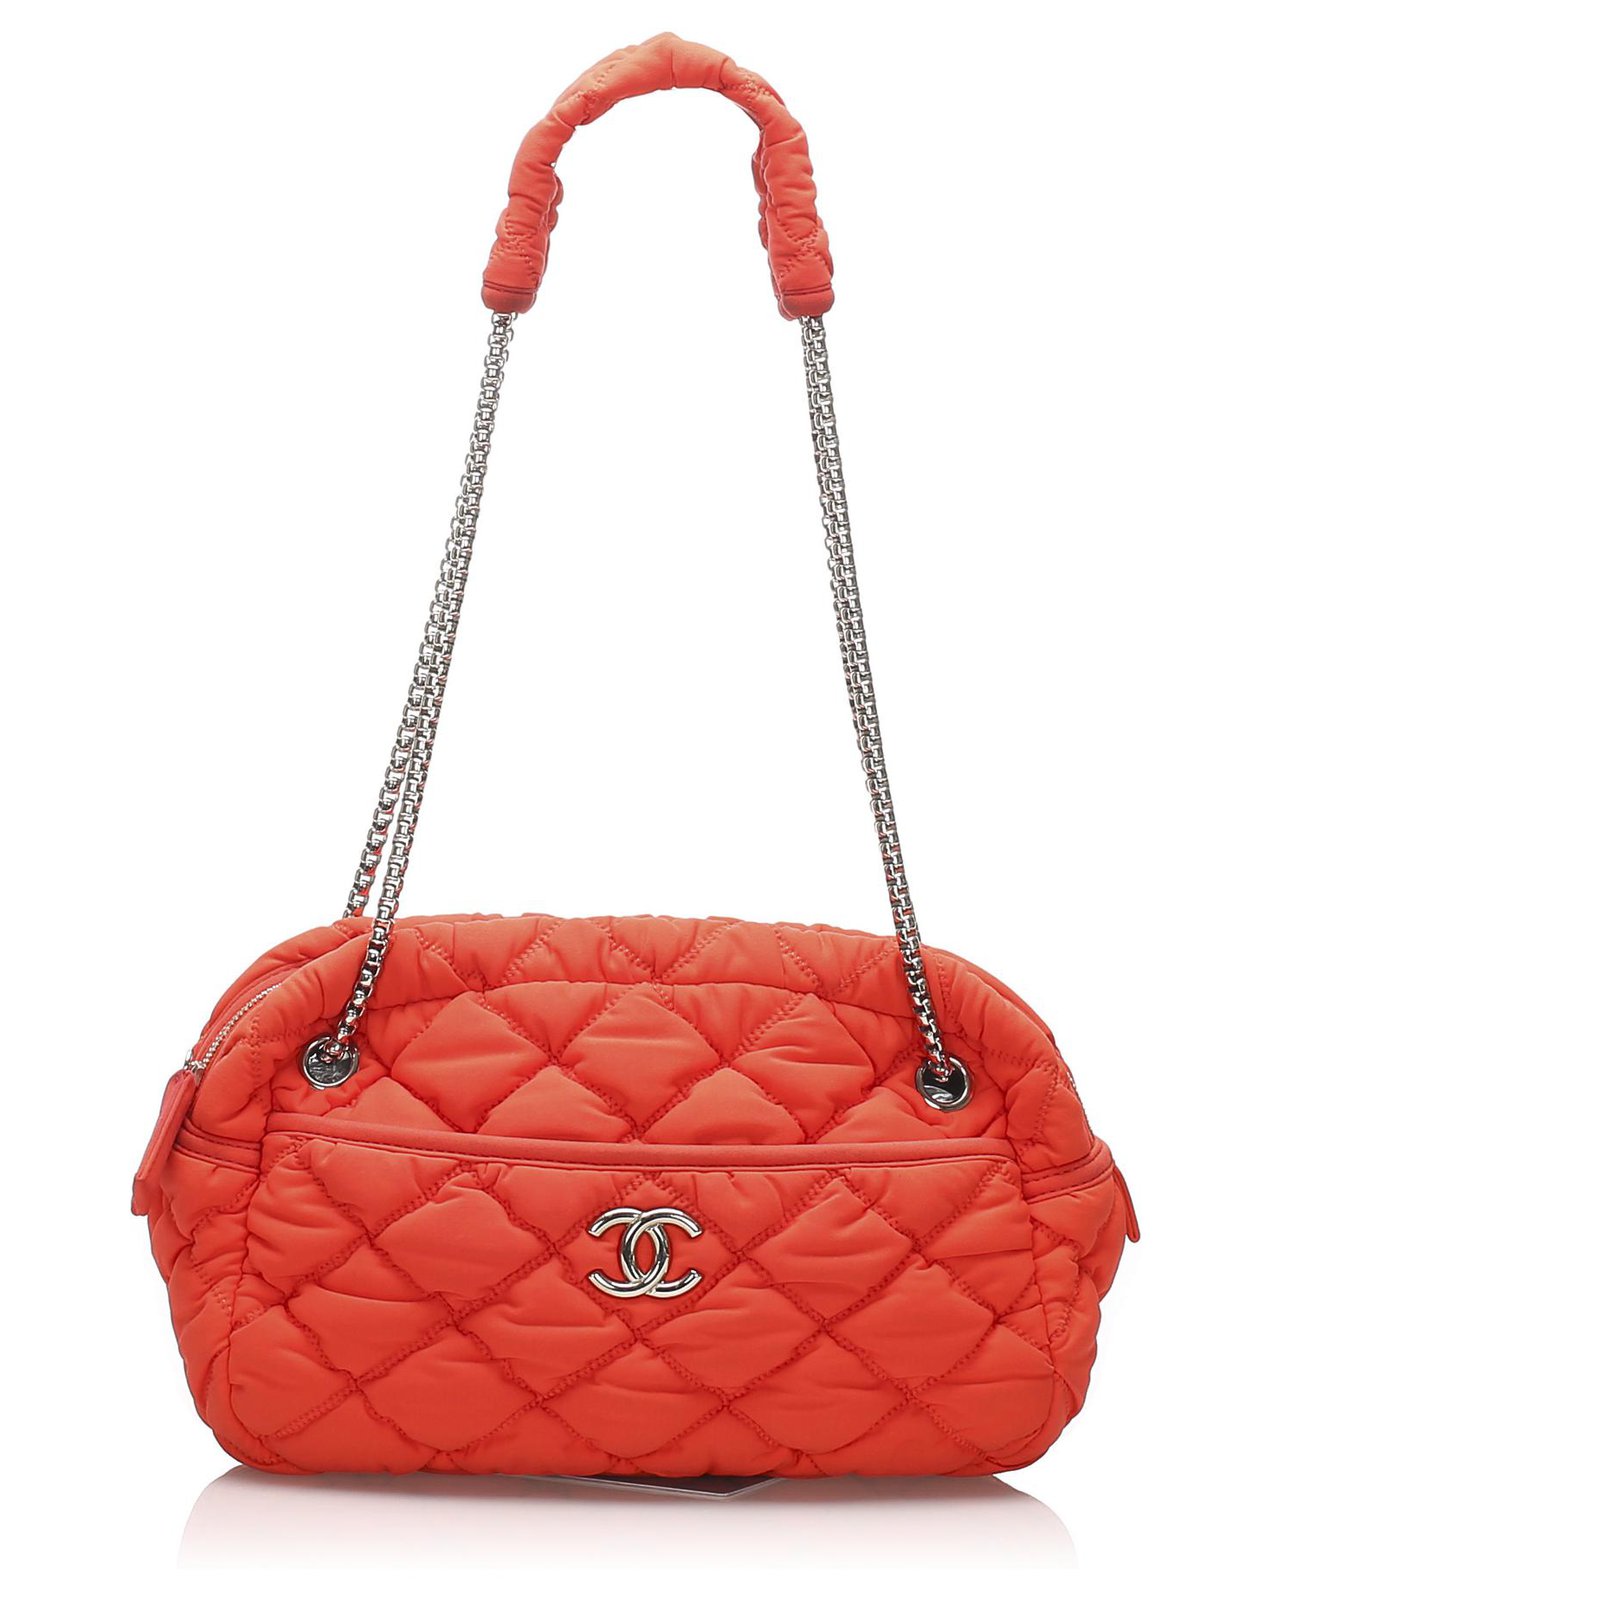 Chanel Red Bubble Quilt Nylon Shoulder Bag